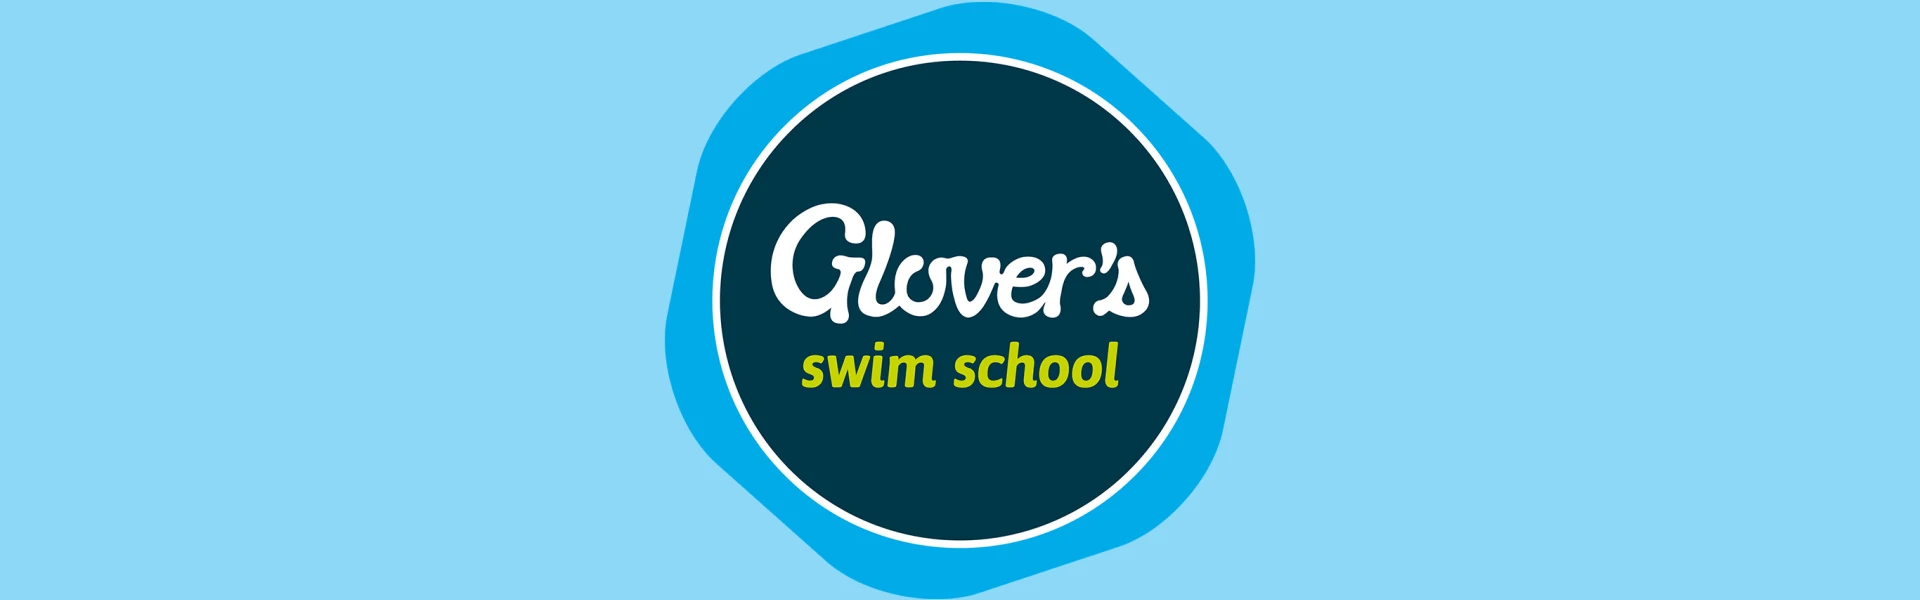 Glovers swim school